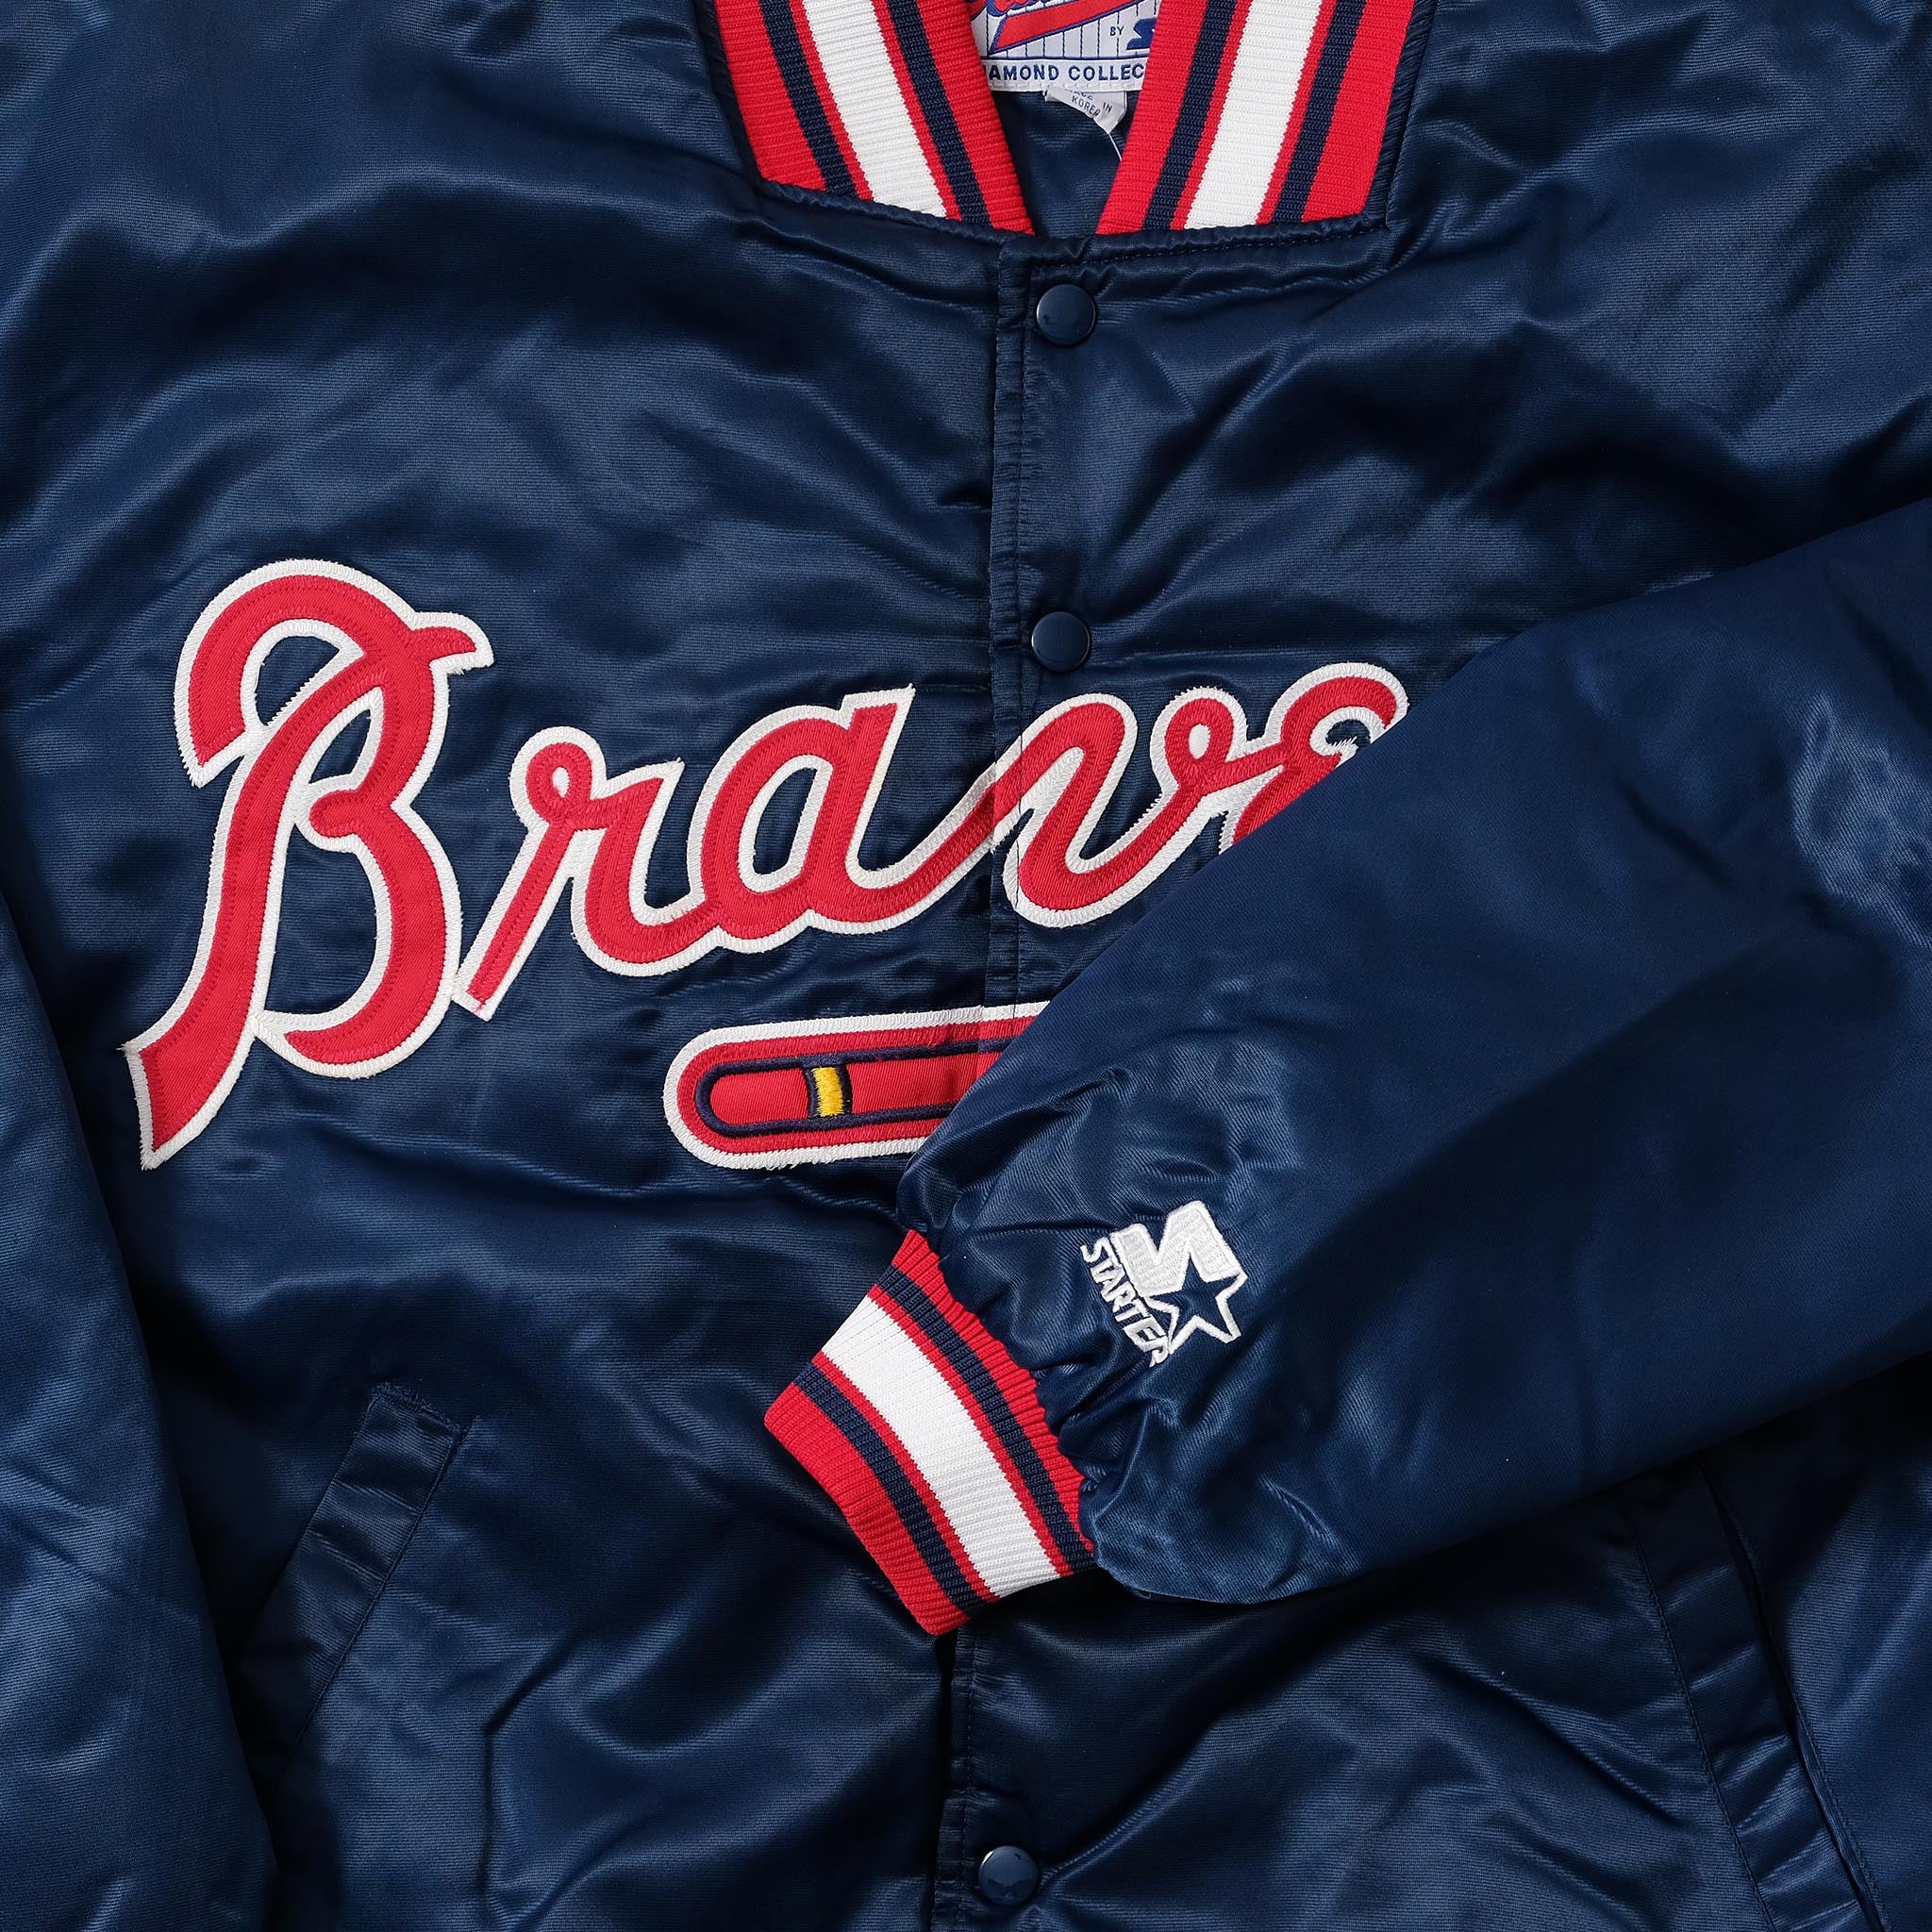 Vintage Atlanta Braves Jersey Starter Genuine Merchandise XL Blue MLB  Baseball